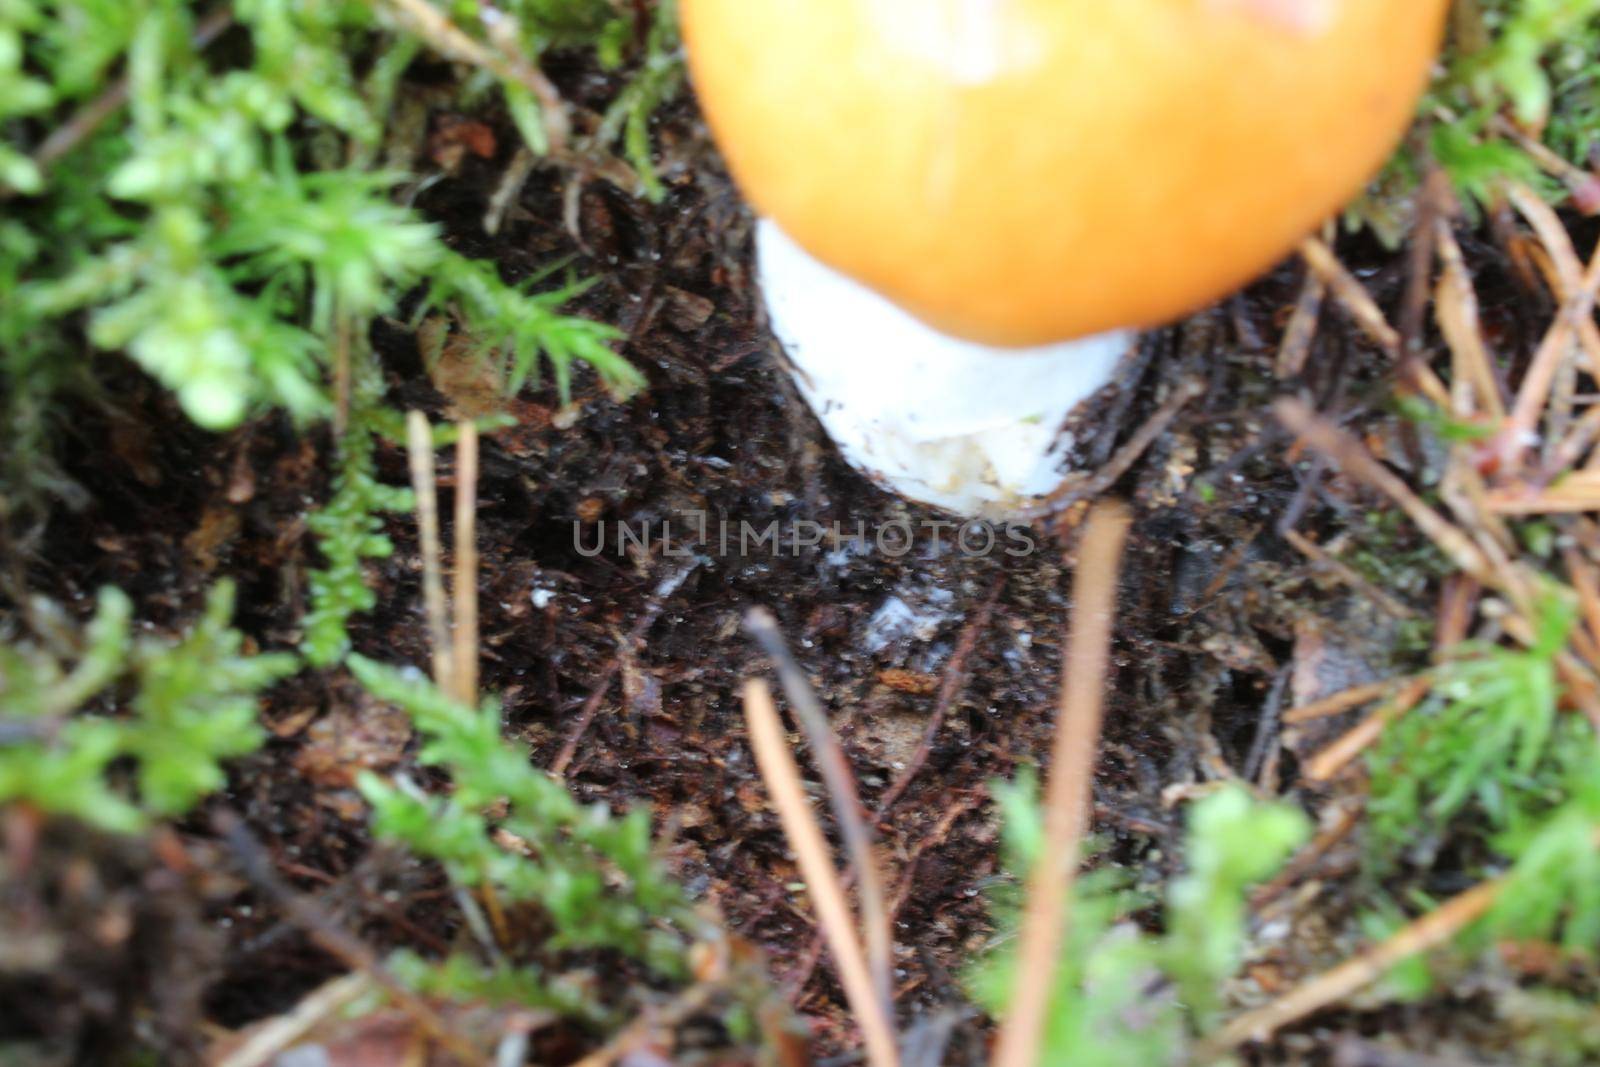 mycelium of white mushroom with brown cap. How mushrooms grow.